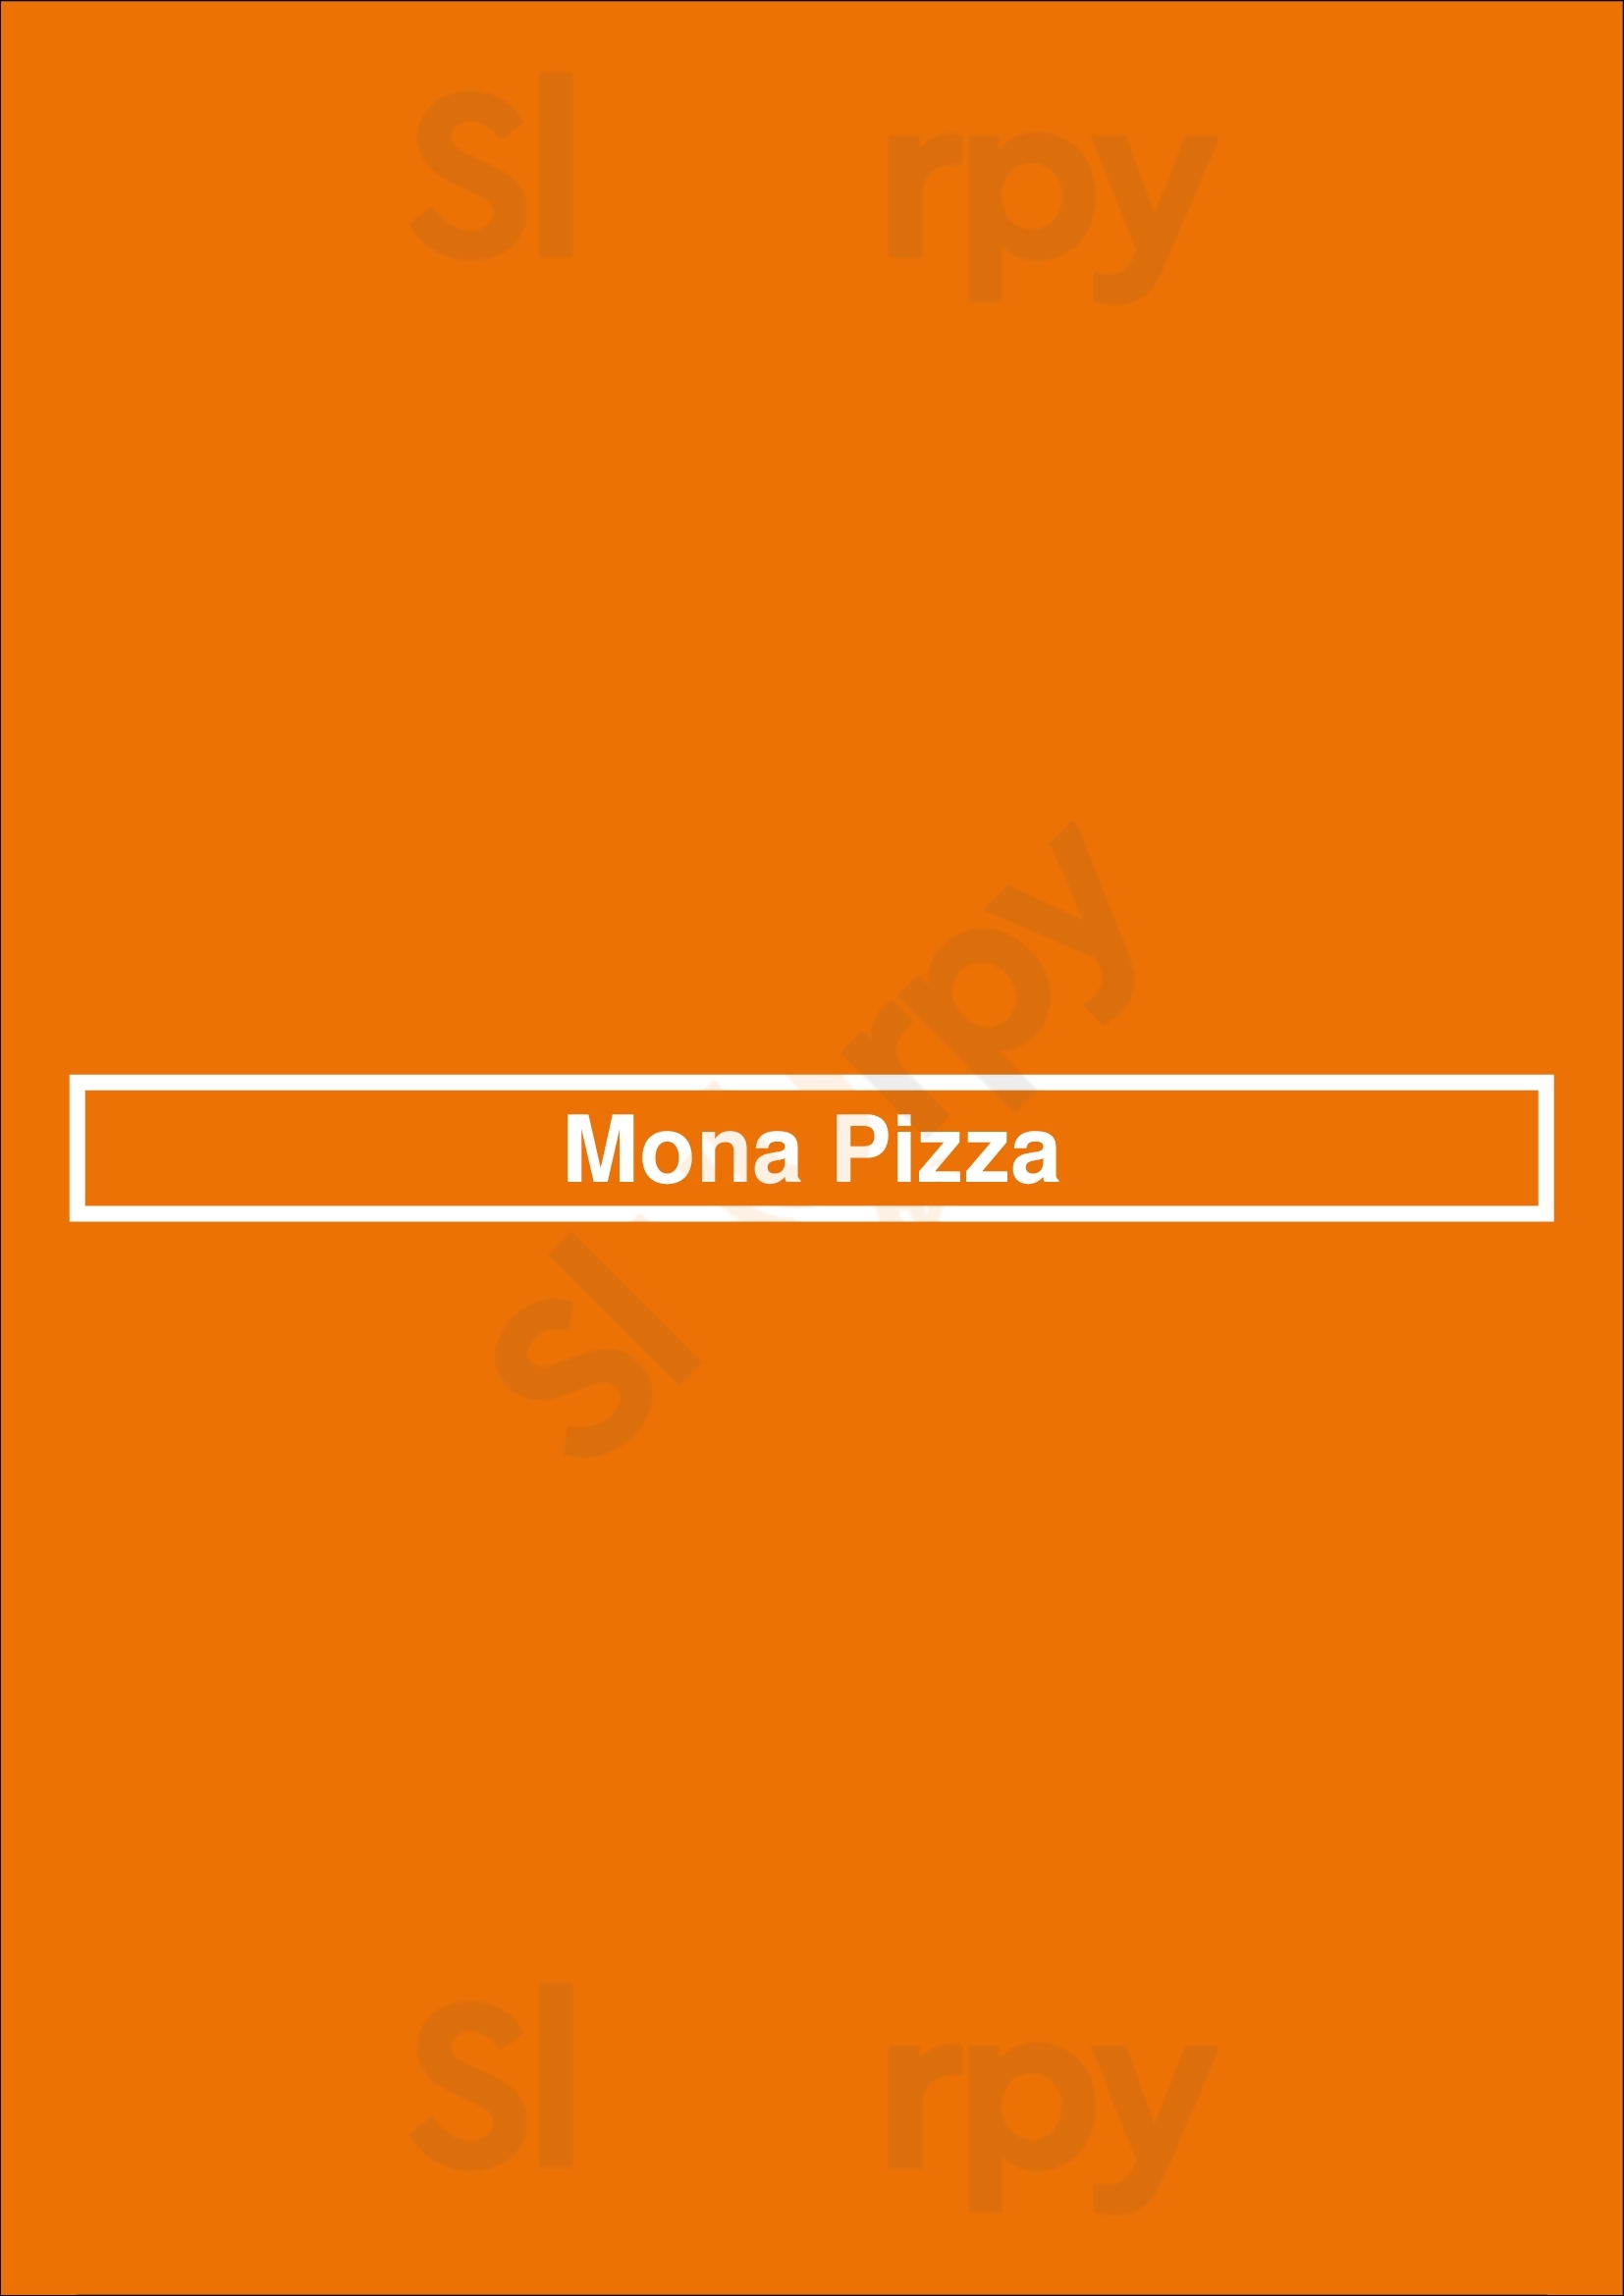 Mona Pizza Maple Ridge Menu - 1